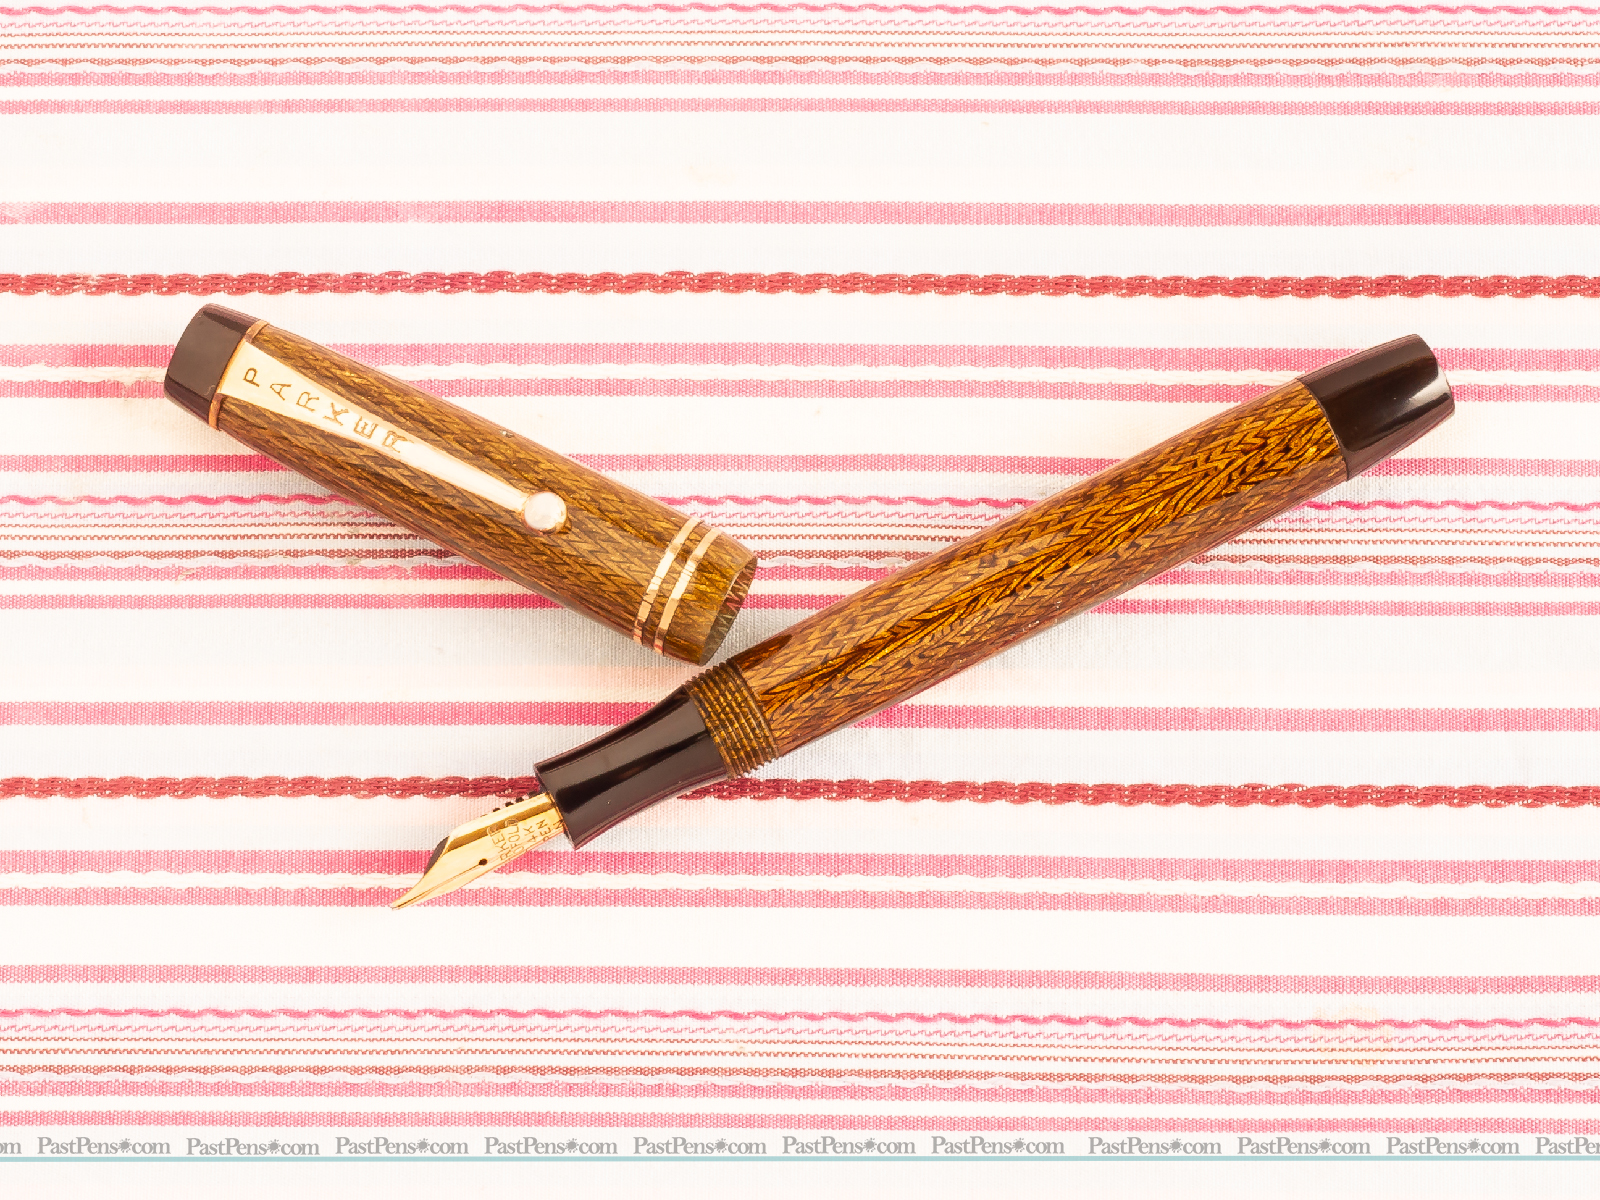 parker duofold golden herringbone fountain pen pk279 model